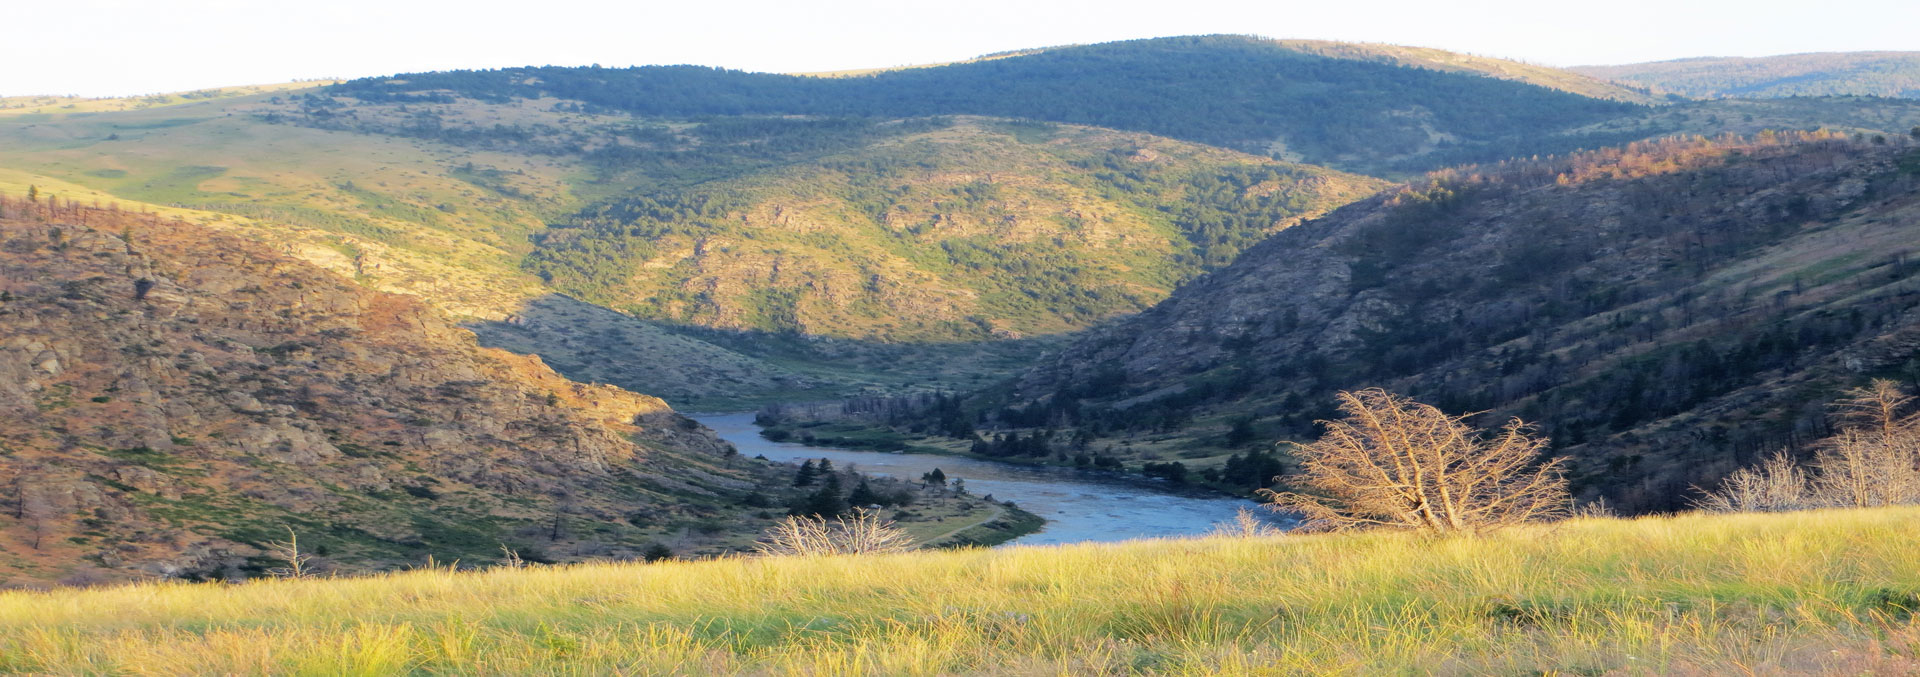 montana ranch for sale bear trap canyon fishing ranch